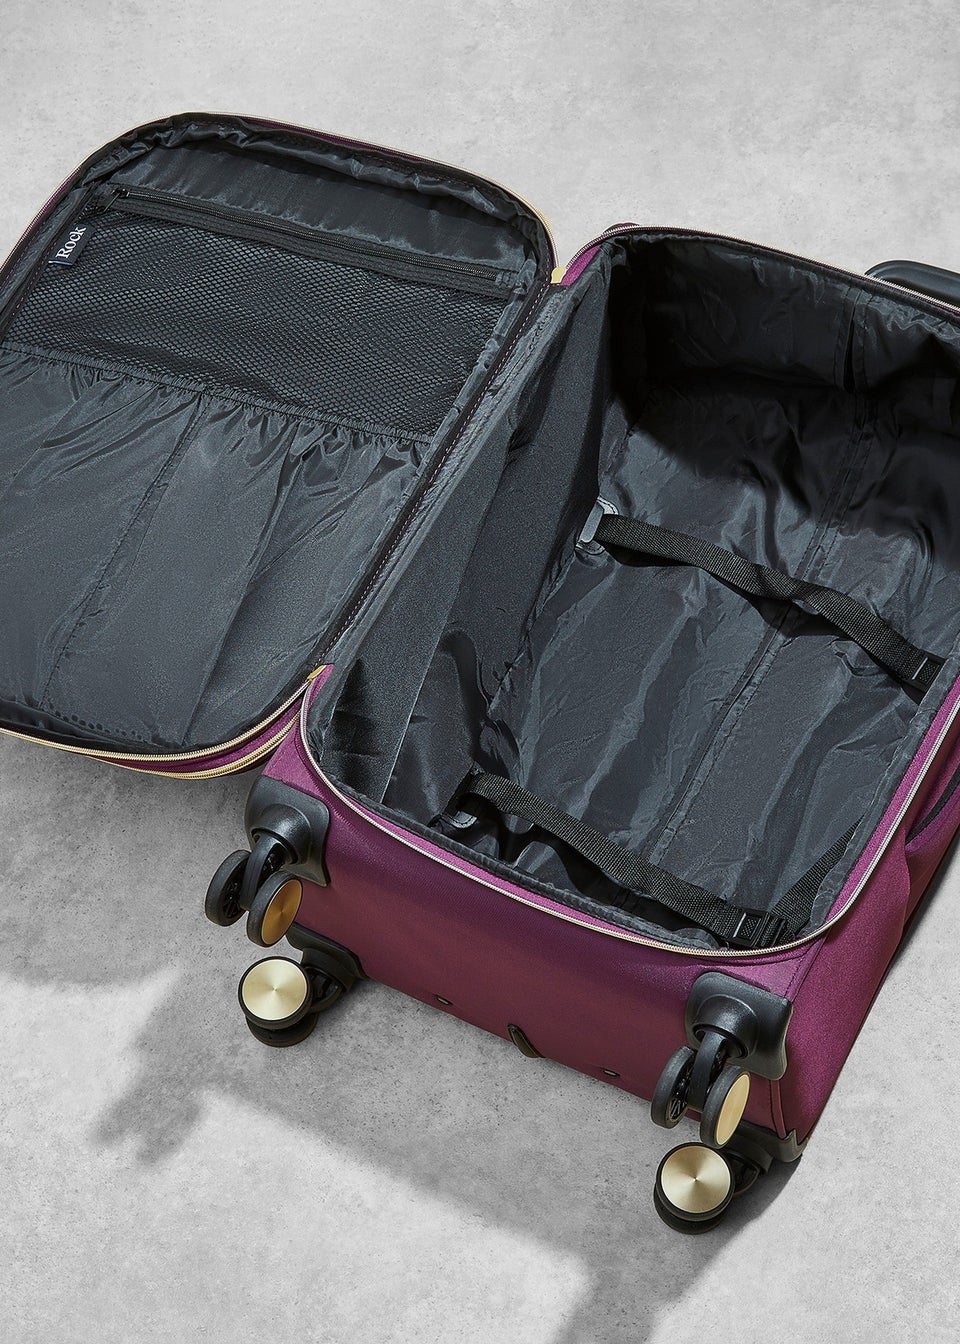 Rock Purple Sloane Suitcase